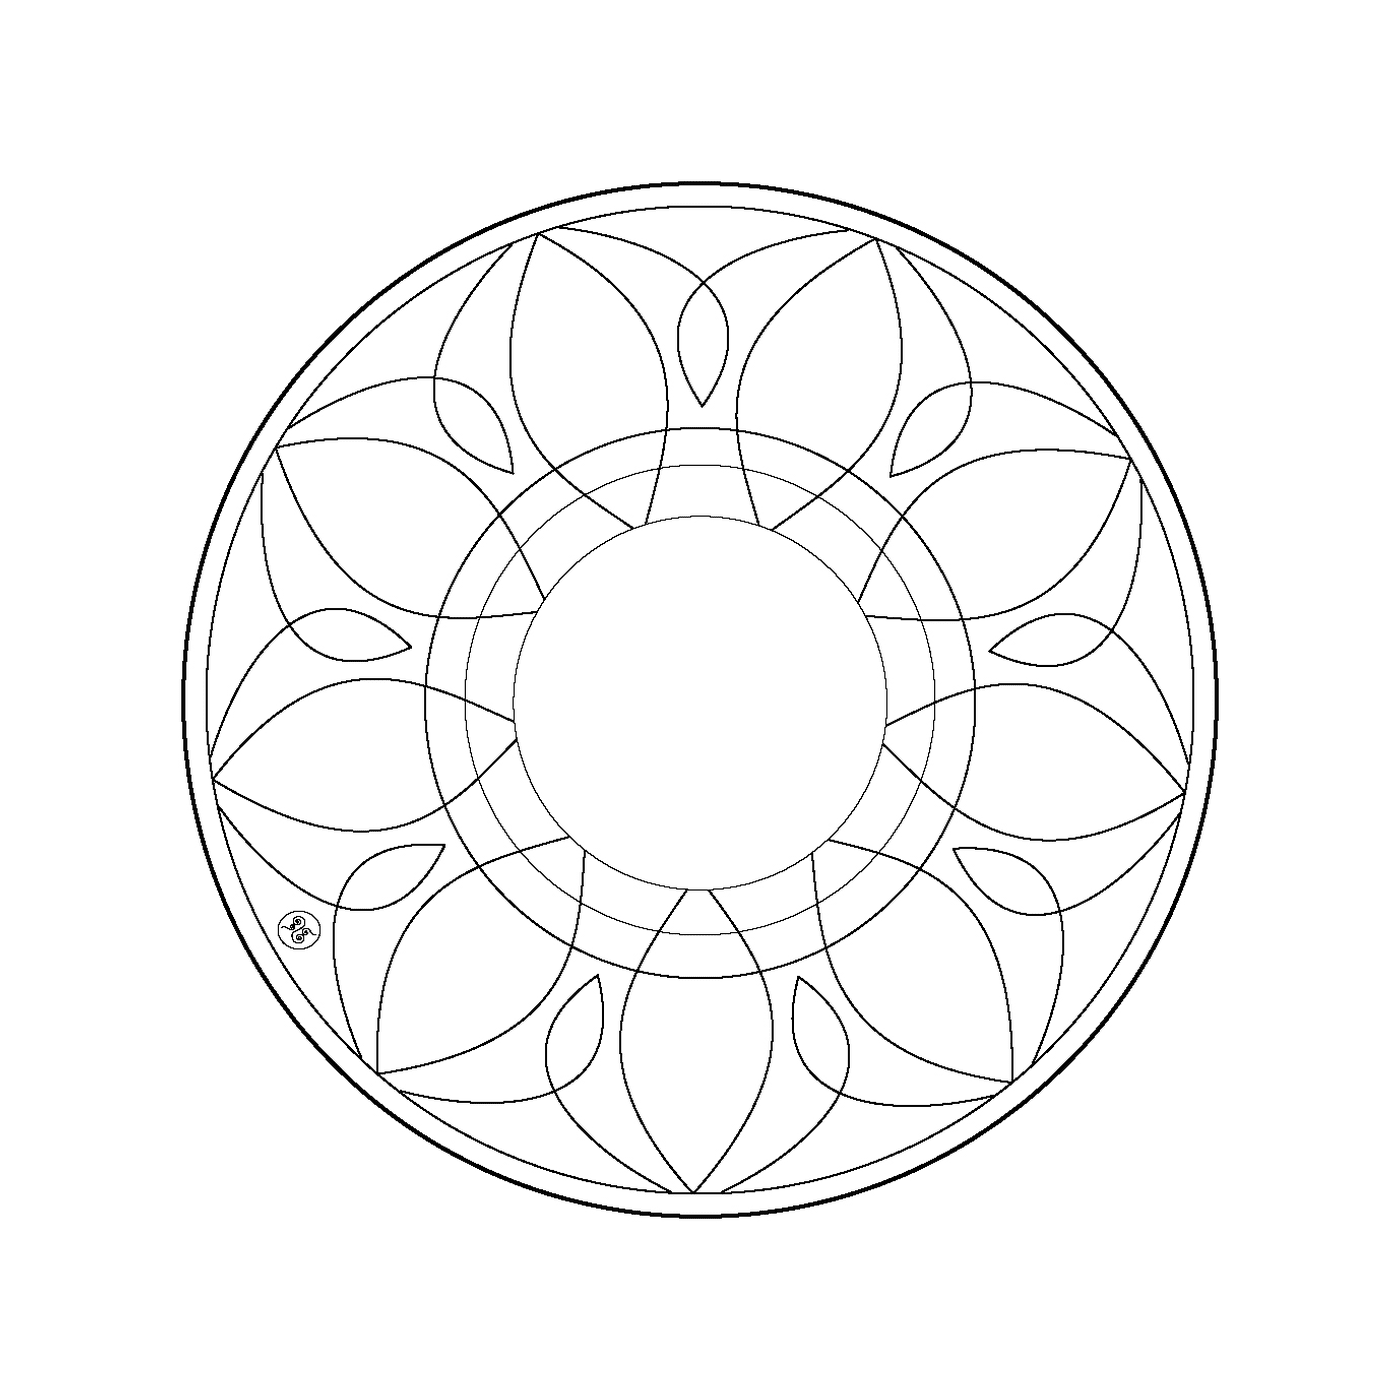  Un cerchio con un motivo floreale 